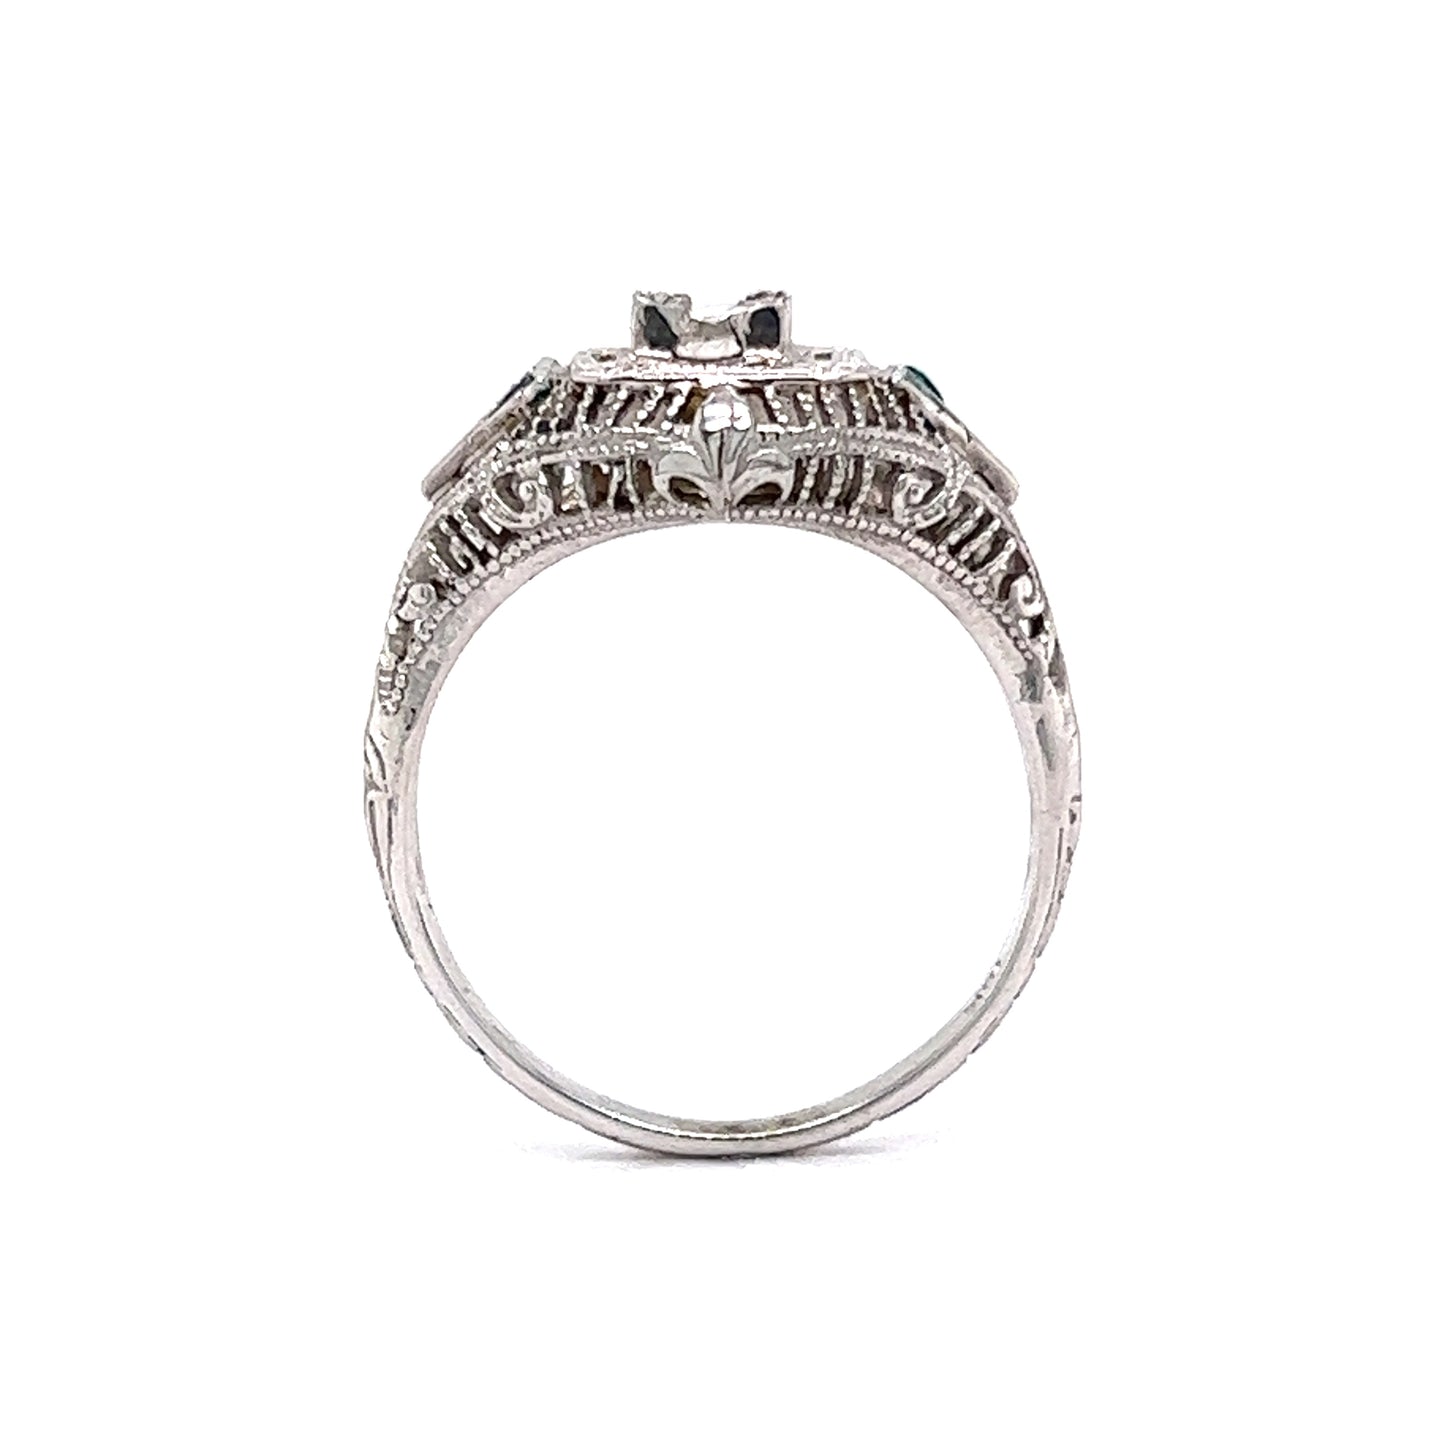 .30 Art Deco Diamond & Emerald Engagement Ring in 18k White Gold